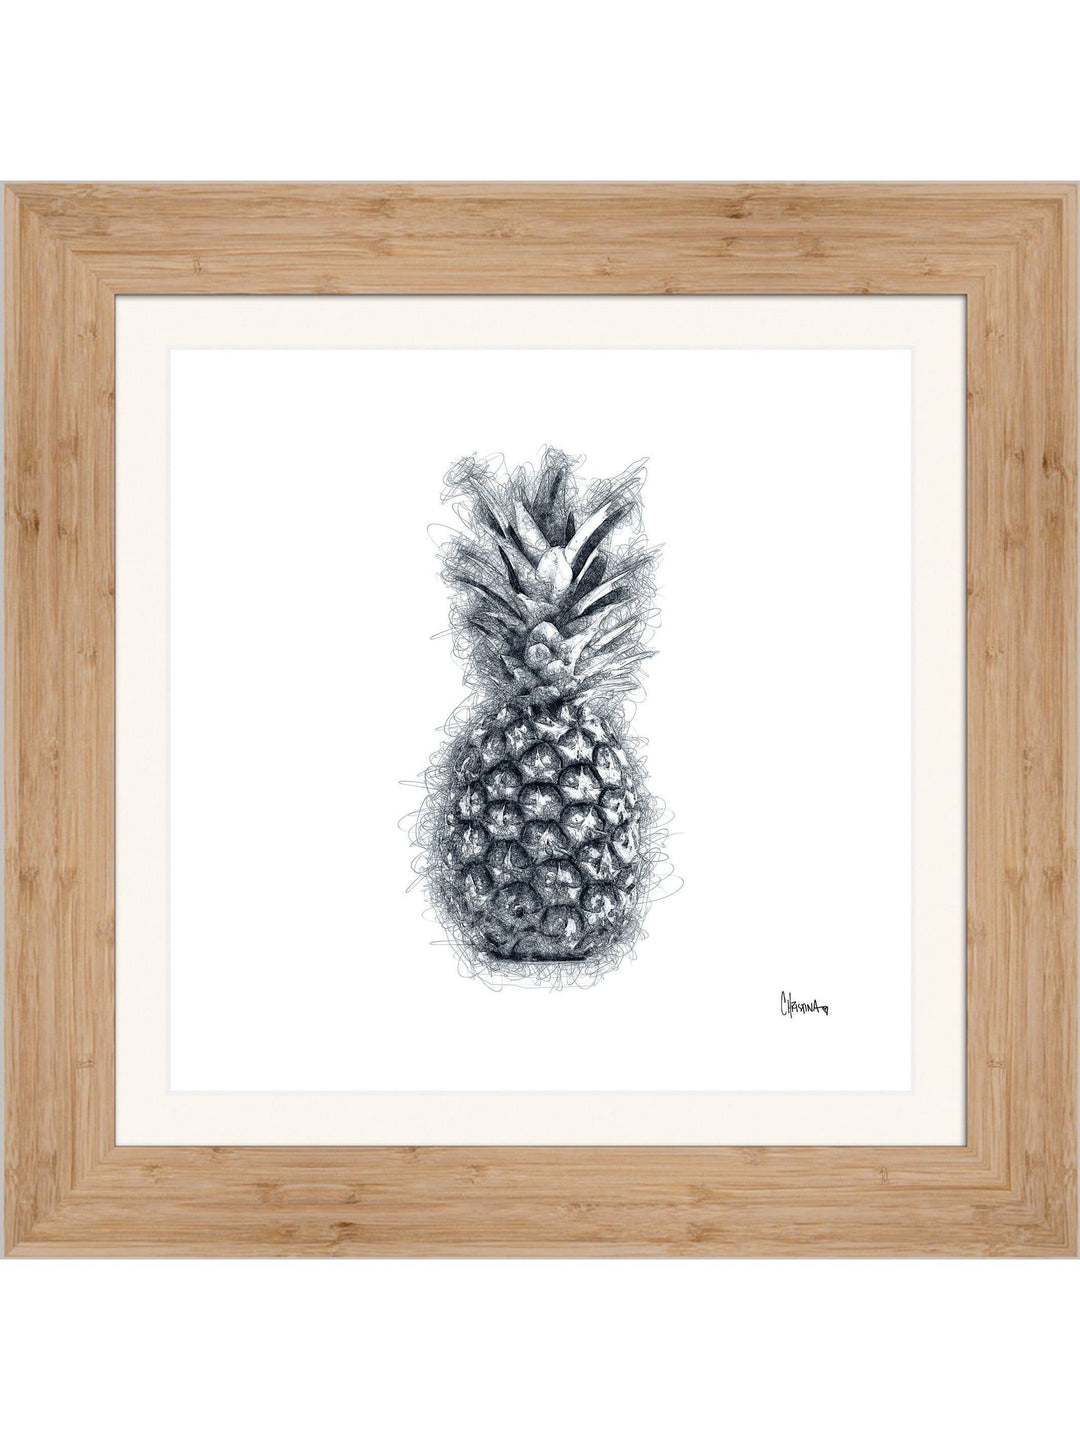 Pineapple Square Edition - Square Editions - Christina Stefani - Stefani Fine Art